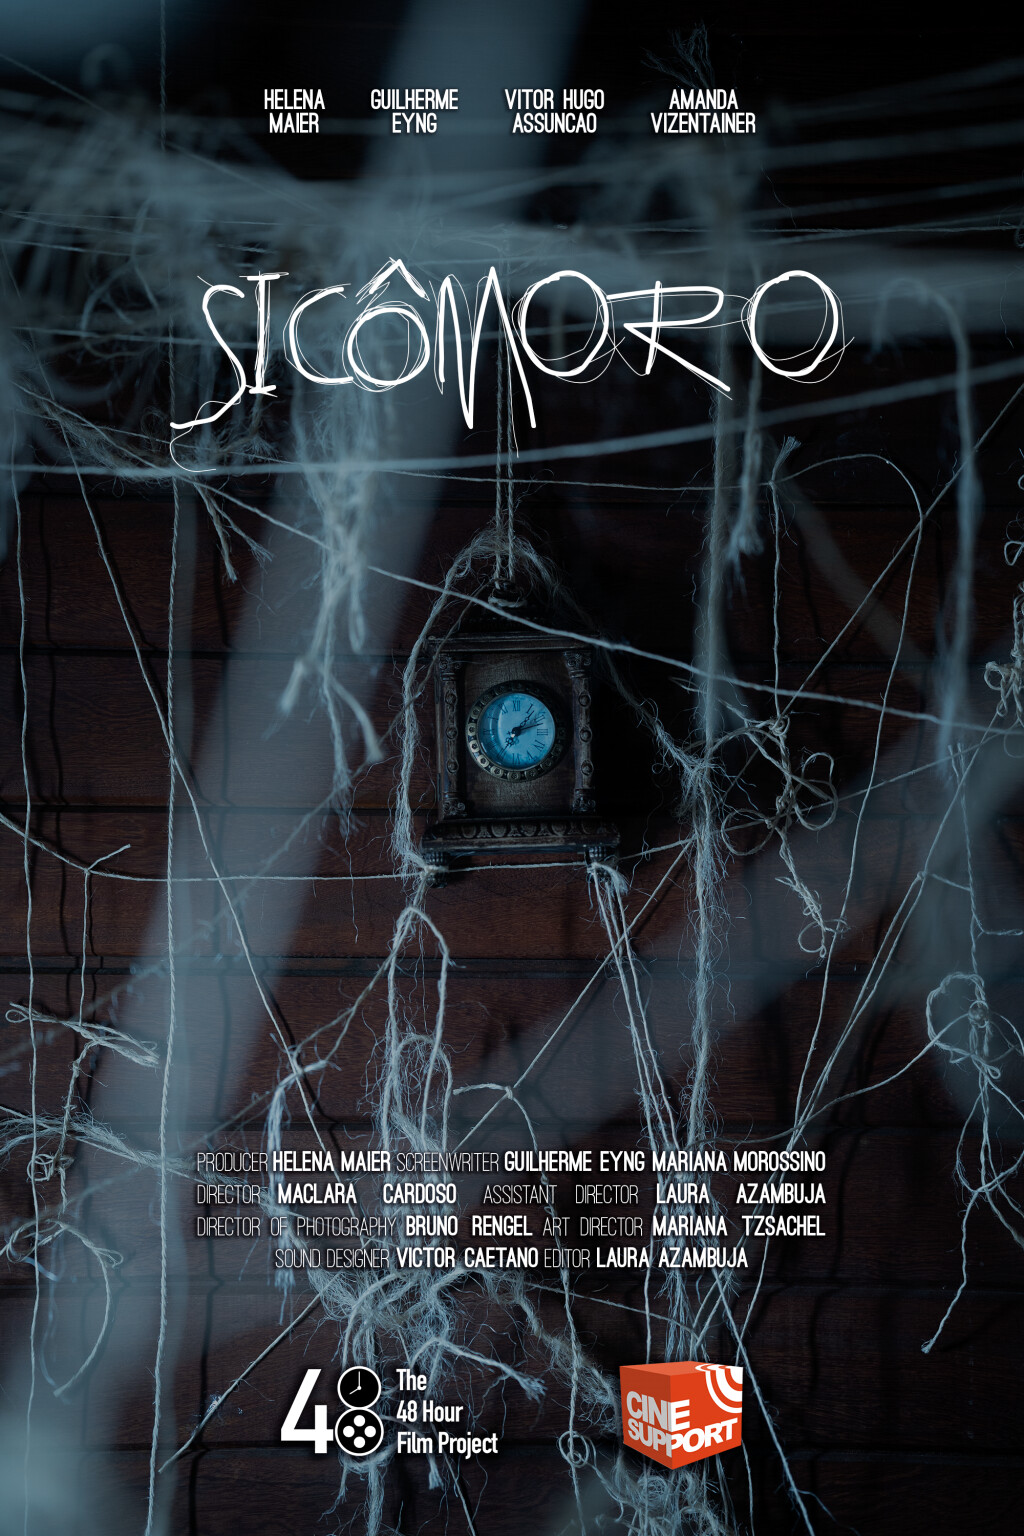 Filmposter for Sicômoro